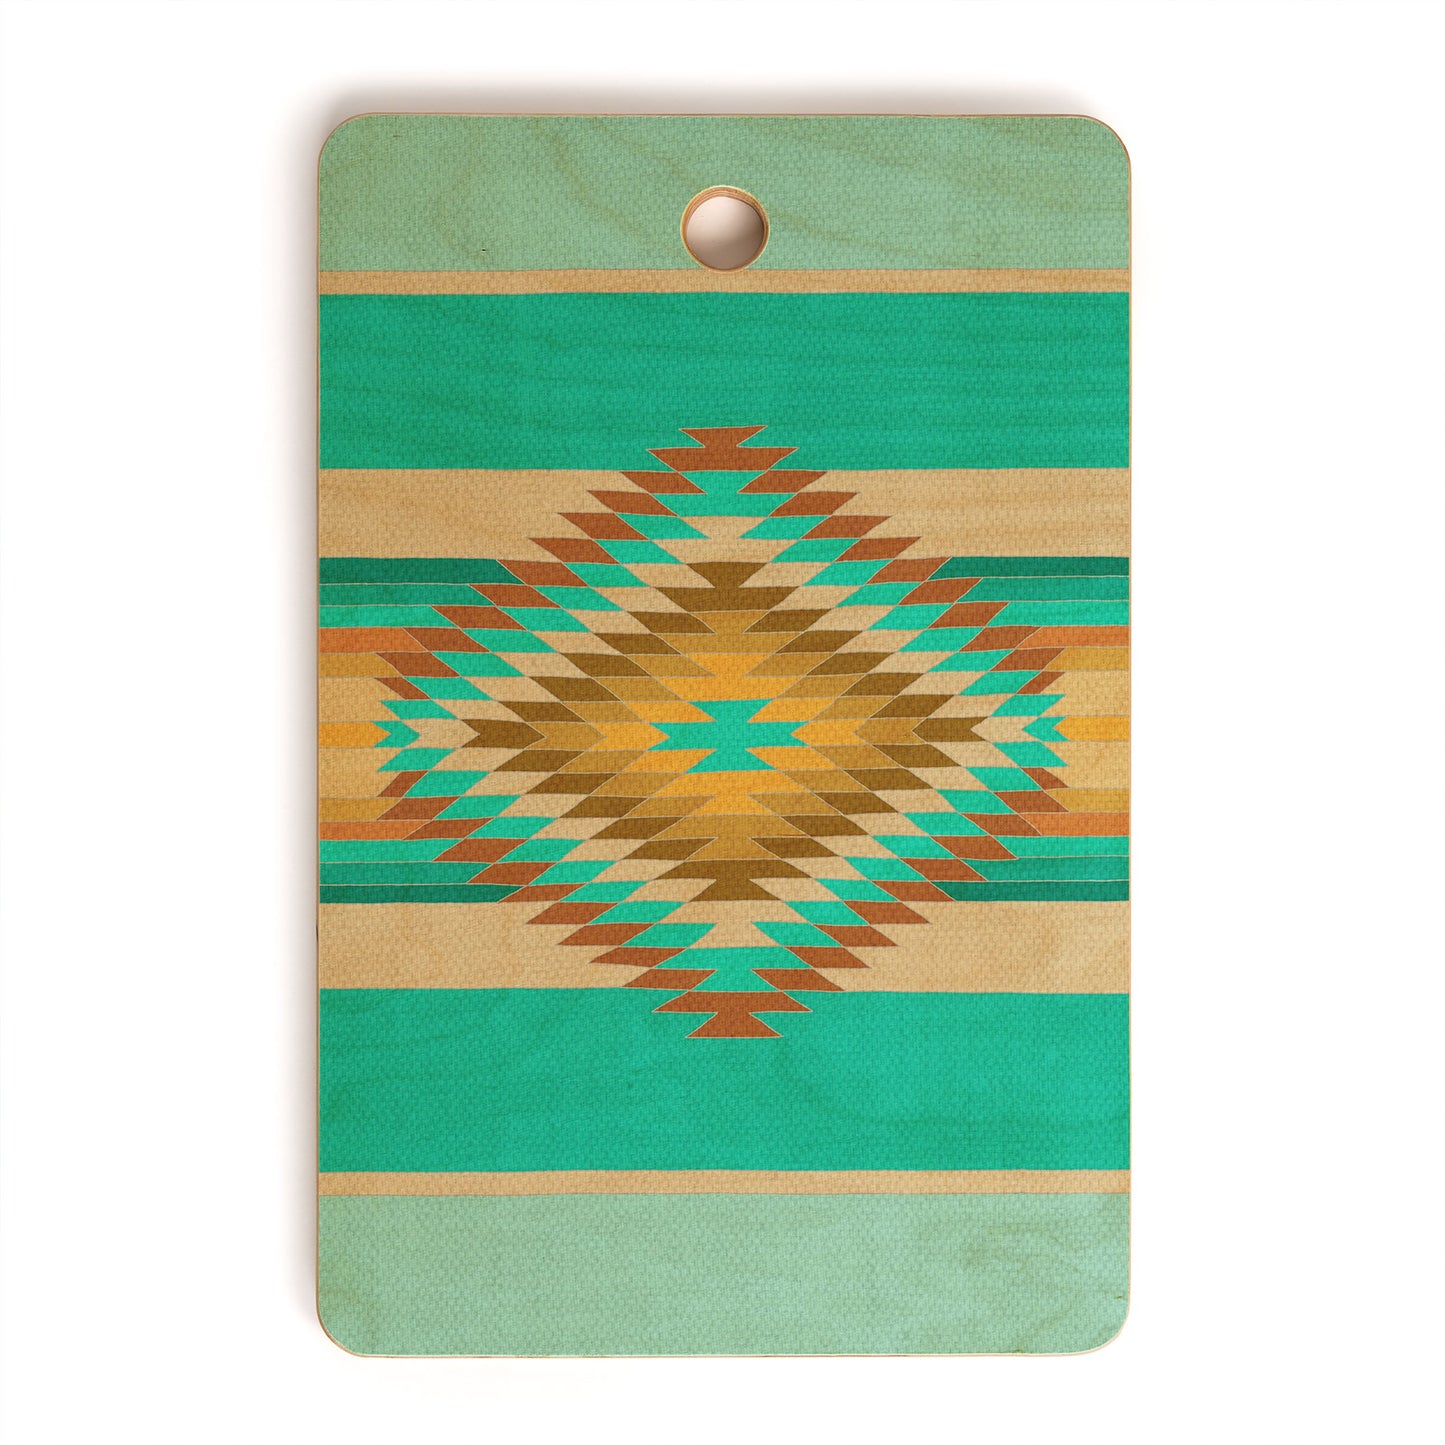 Turquoise Aztec Cutting Board - accessories, aztec, board, cutting, decor, geo, geometric, home, home decor, homedecor, kitchen, ranch, ranchhome, southwestern, western - fiesta teal - Baha Ranch Western Wear